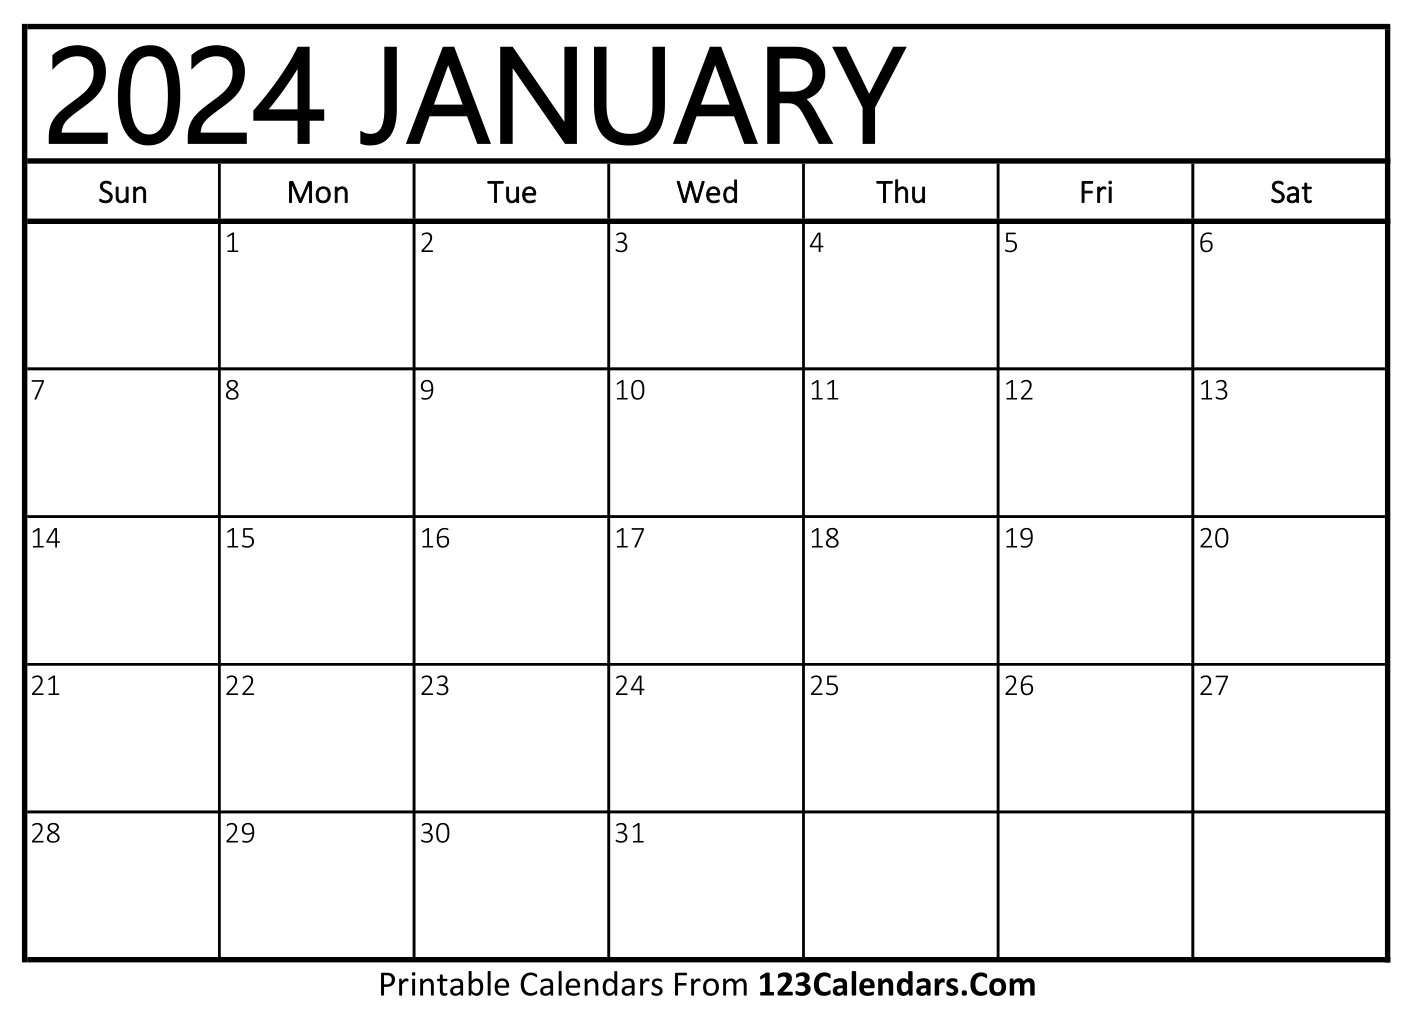 Printable January 2024 Calendar Templates - 123Calendars | Free Printable Calendar 2024 Wiki